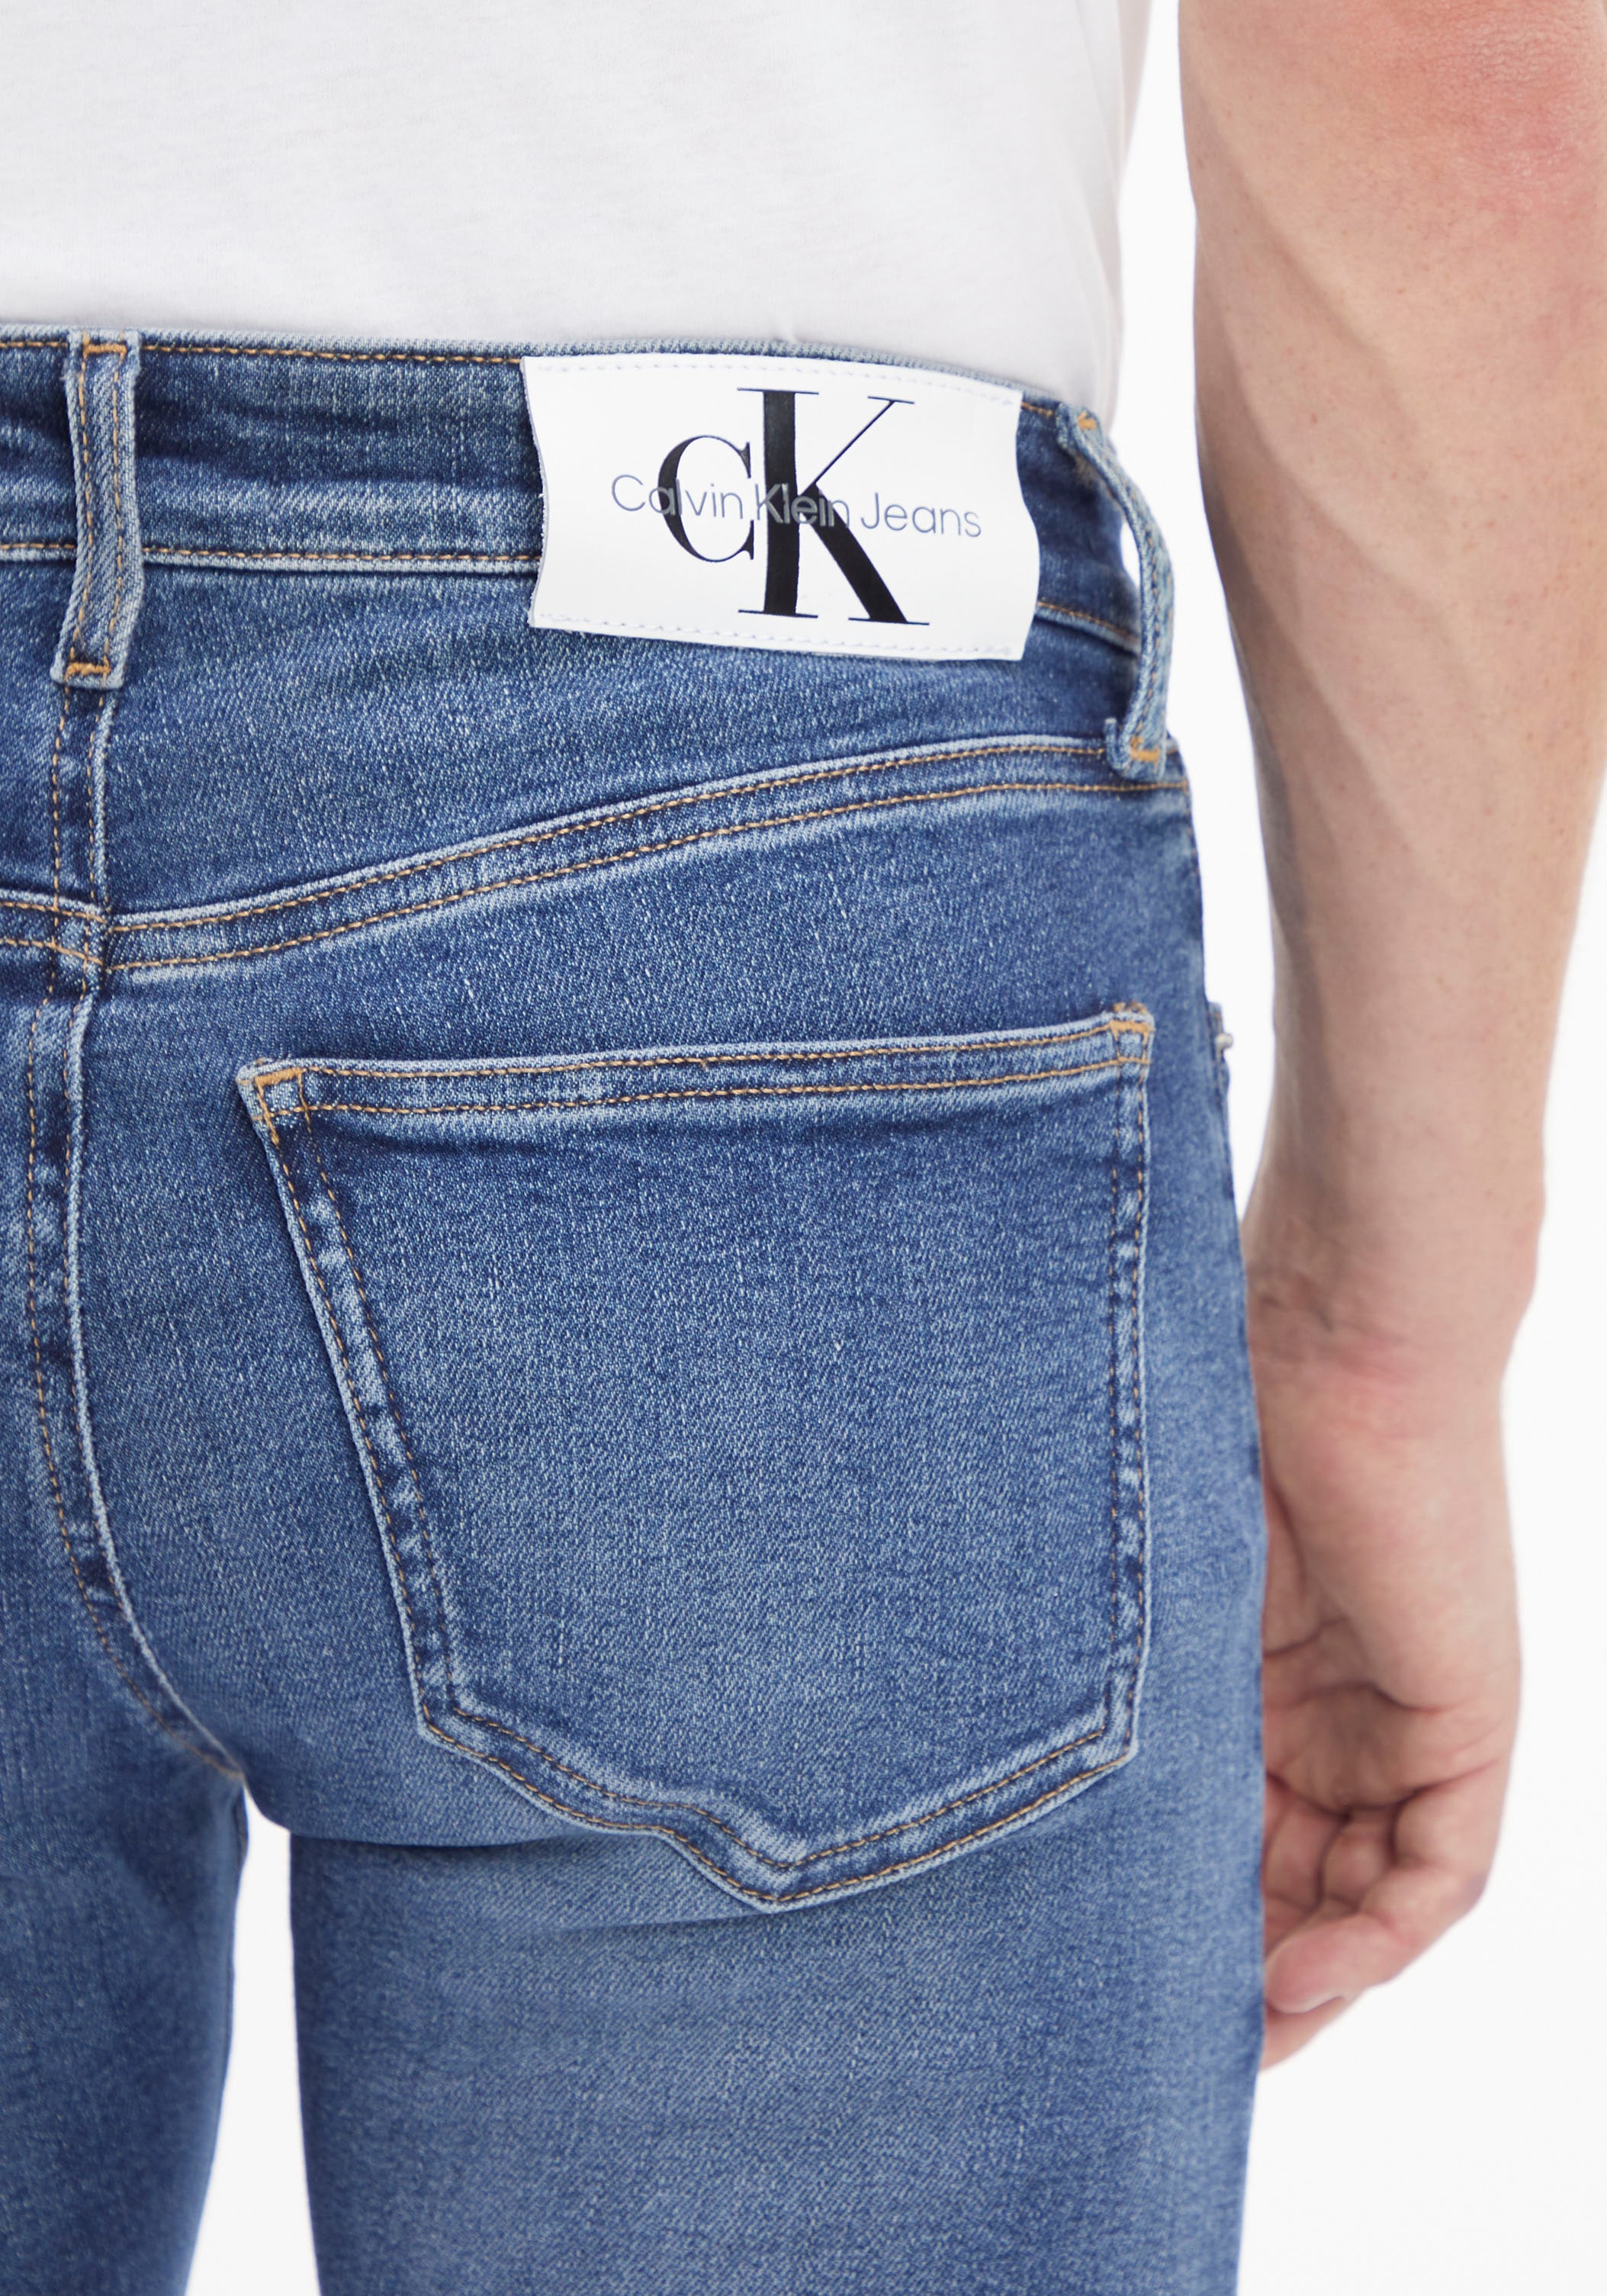 bestellen online Klein Calvin im Jeans 5-Pocket-Stil Skinny-fit-Jeans,